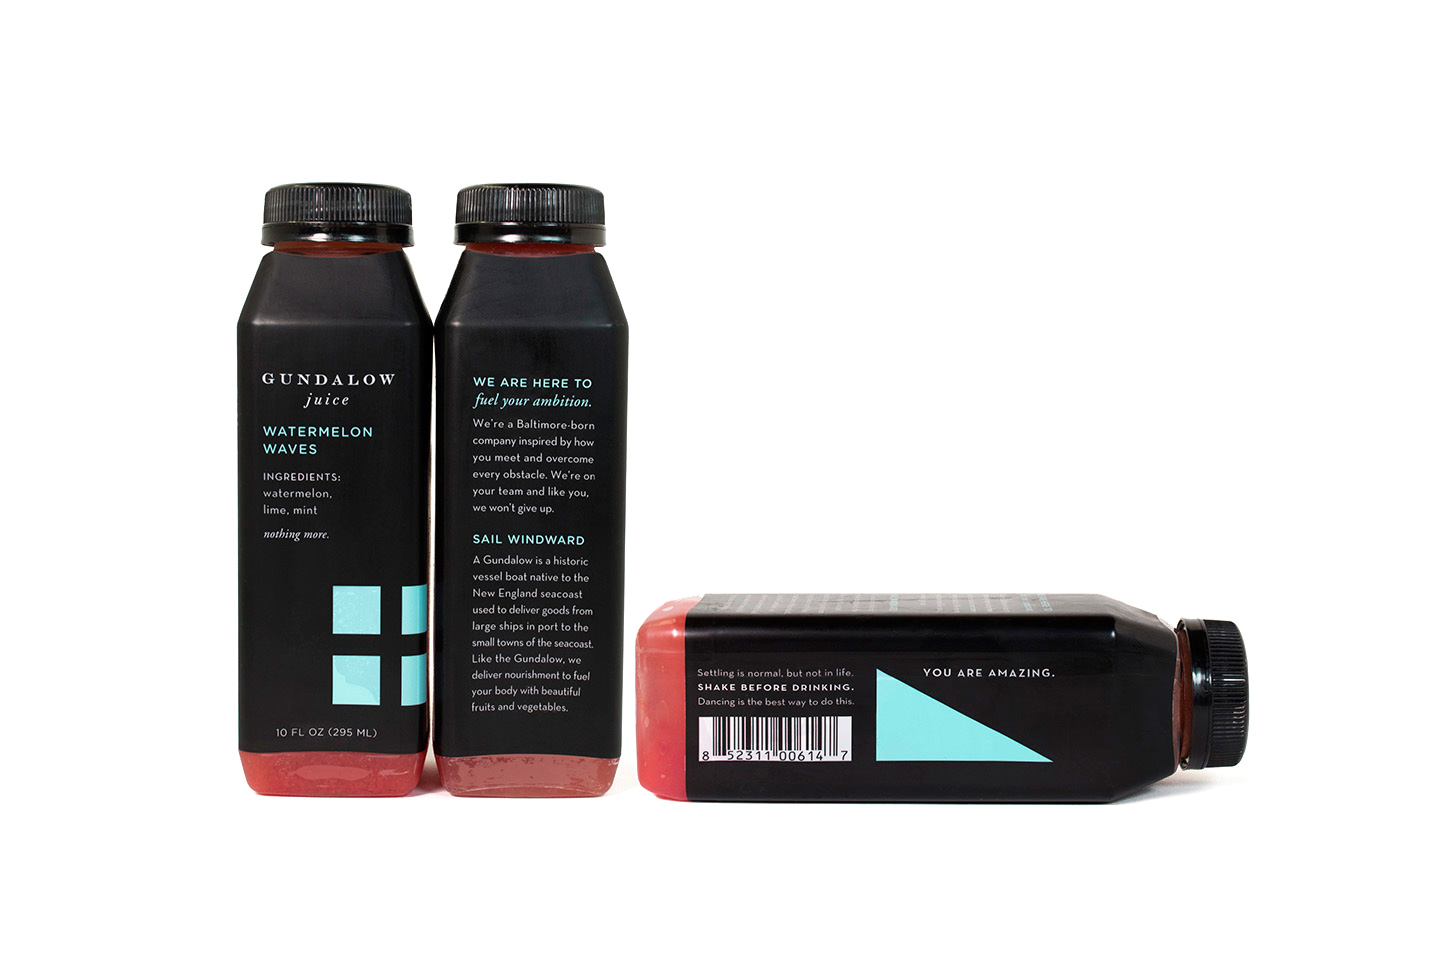 Gundalow Juice: Bottle Package Design for Watermelon Waves